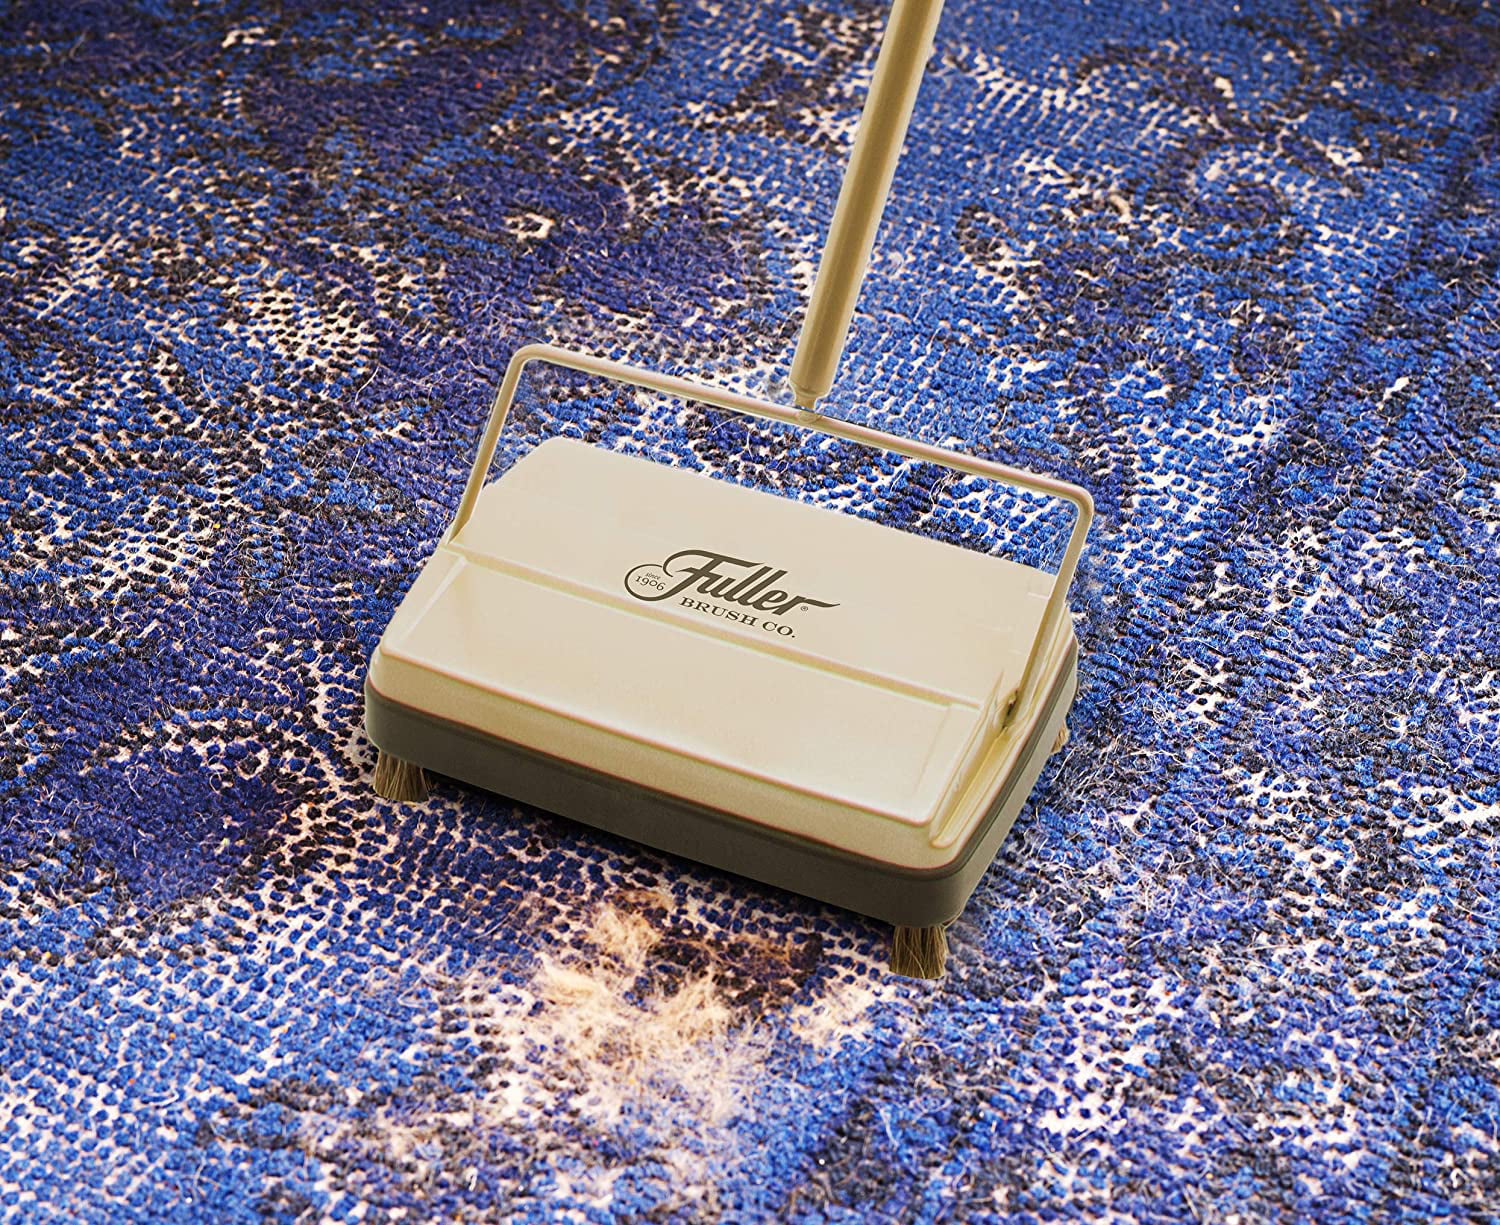 Clean Enough: Fuller Electrostatic Carpet Sweeper Review